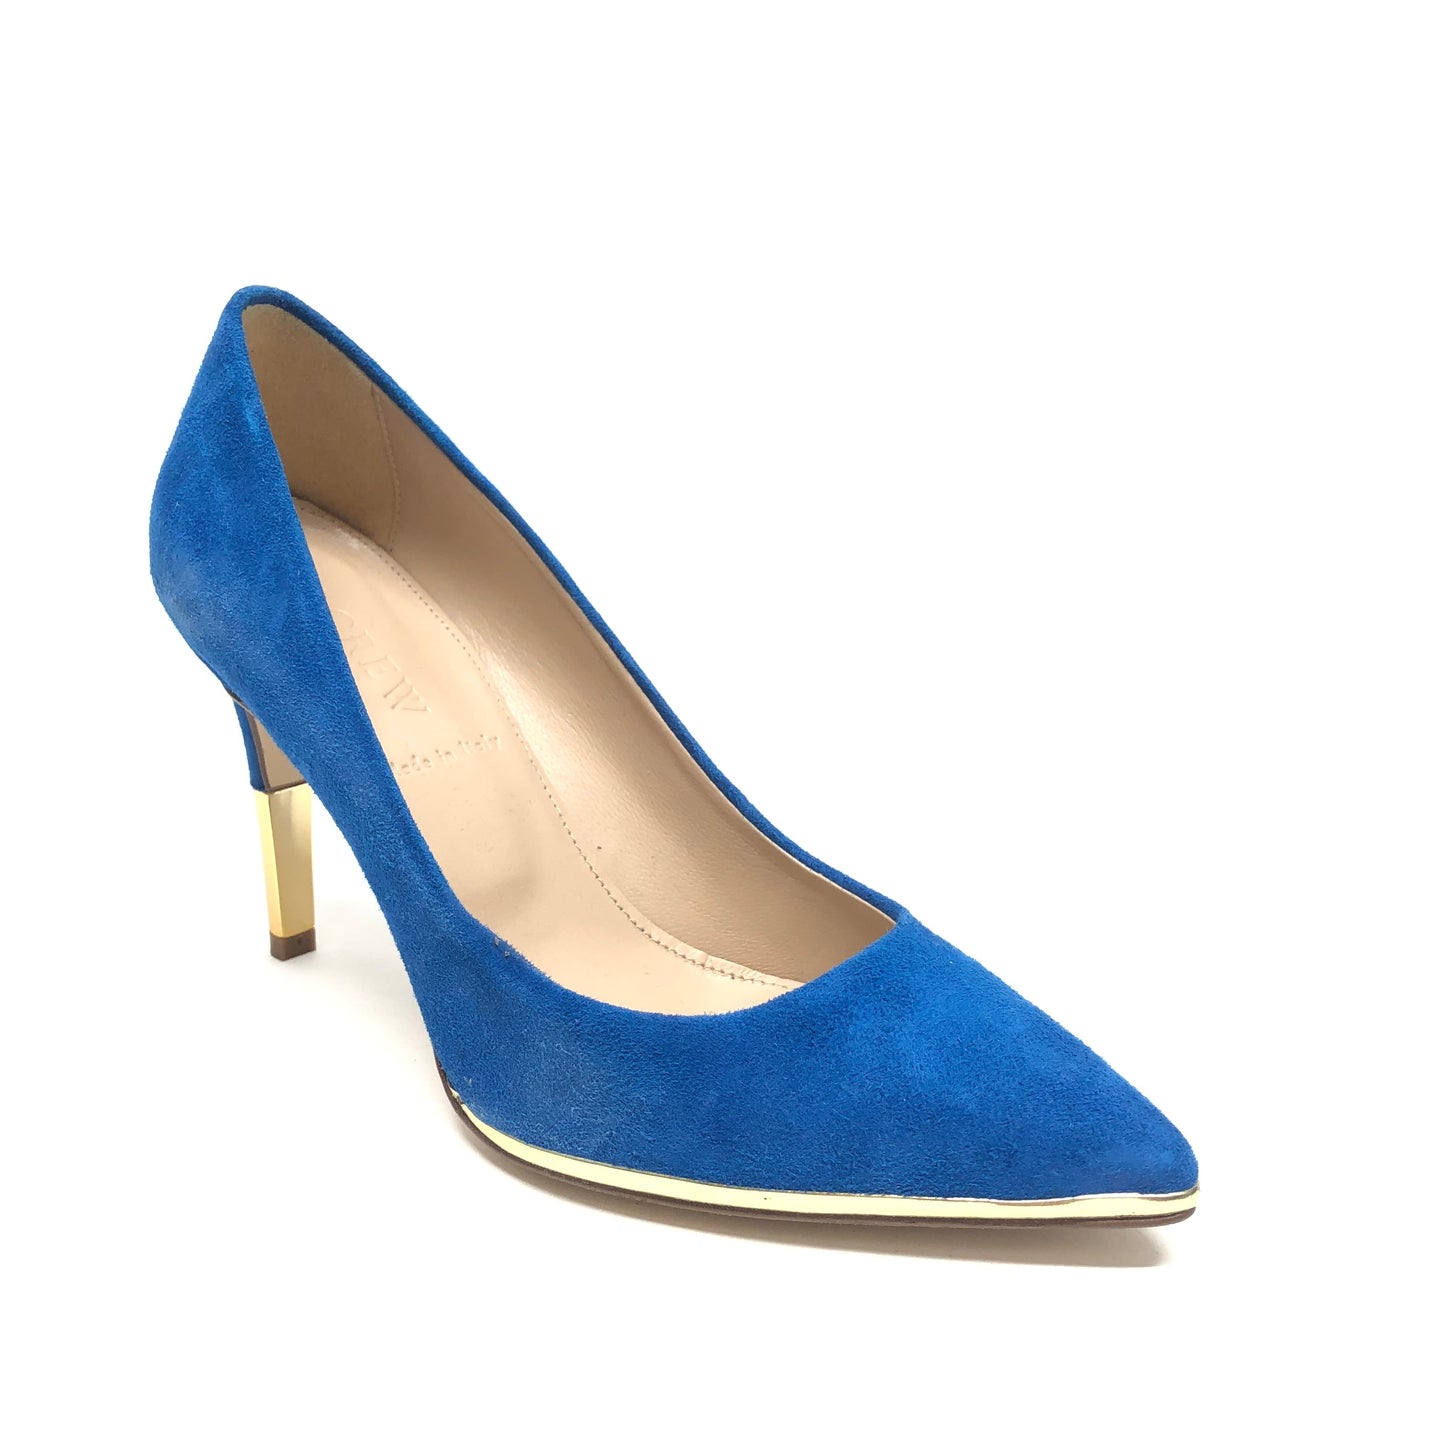 Blue & Gold Shoes Heels Stiletto J. Crew, Size 5